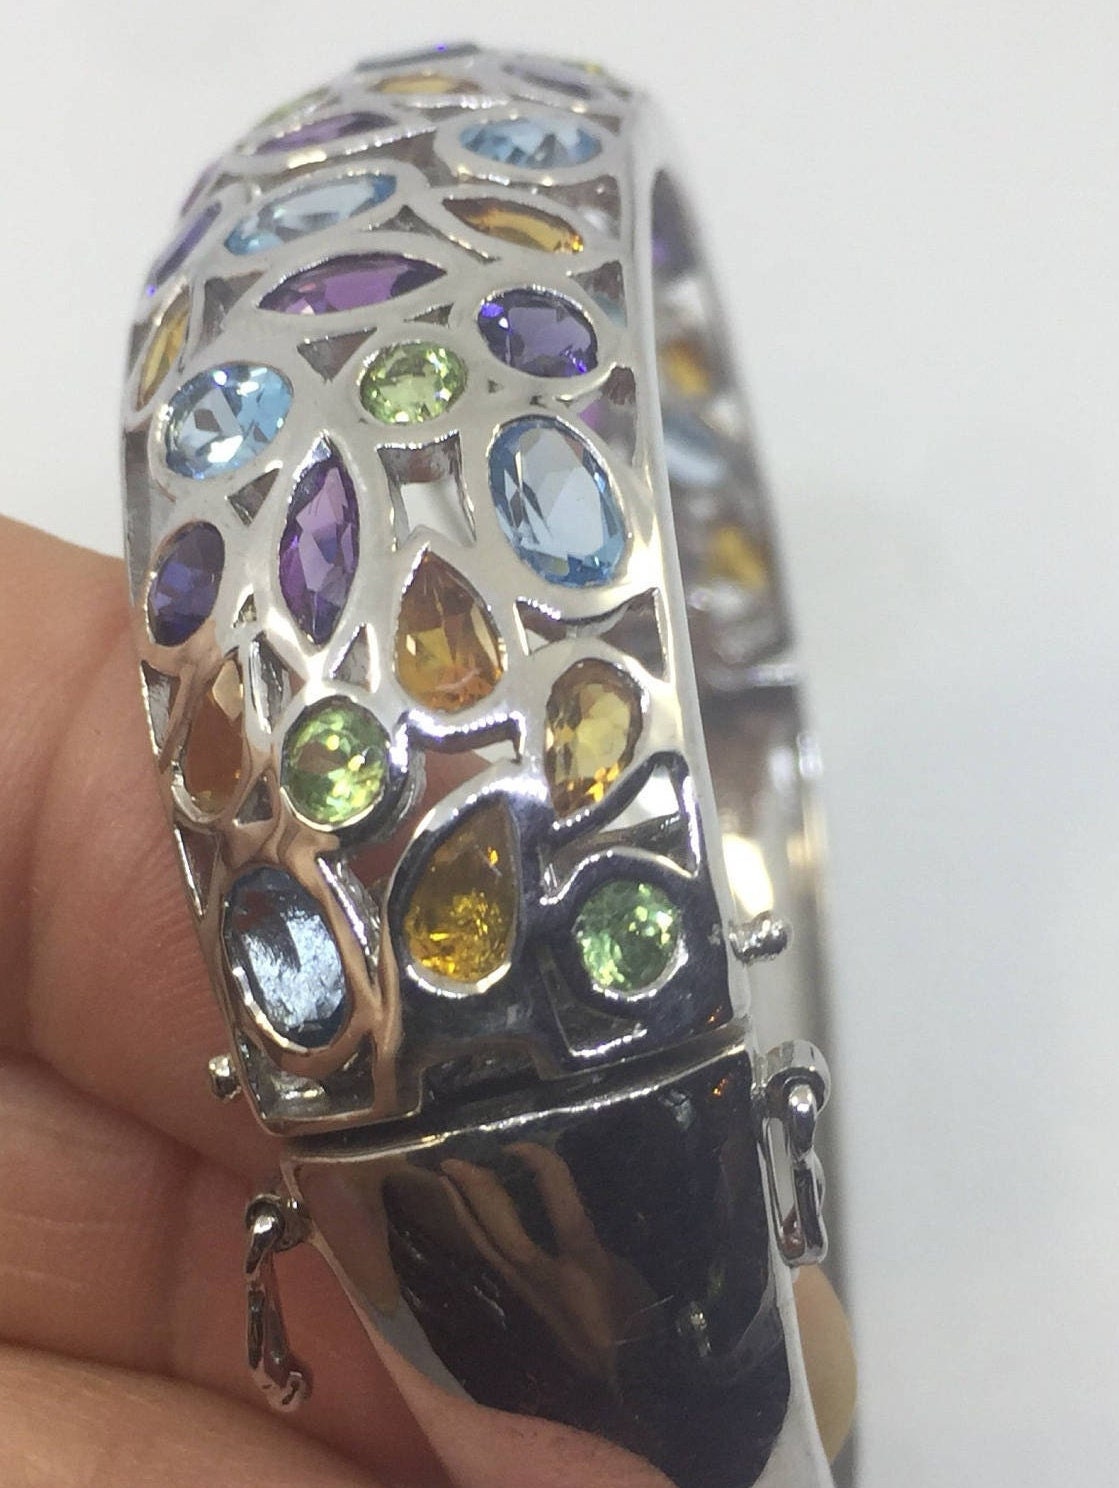 Genuine Mixed Gemstones in 925 Sterling Silver Deco Bangle Bracelet